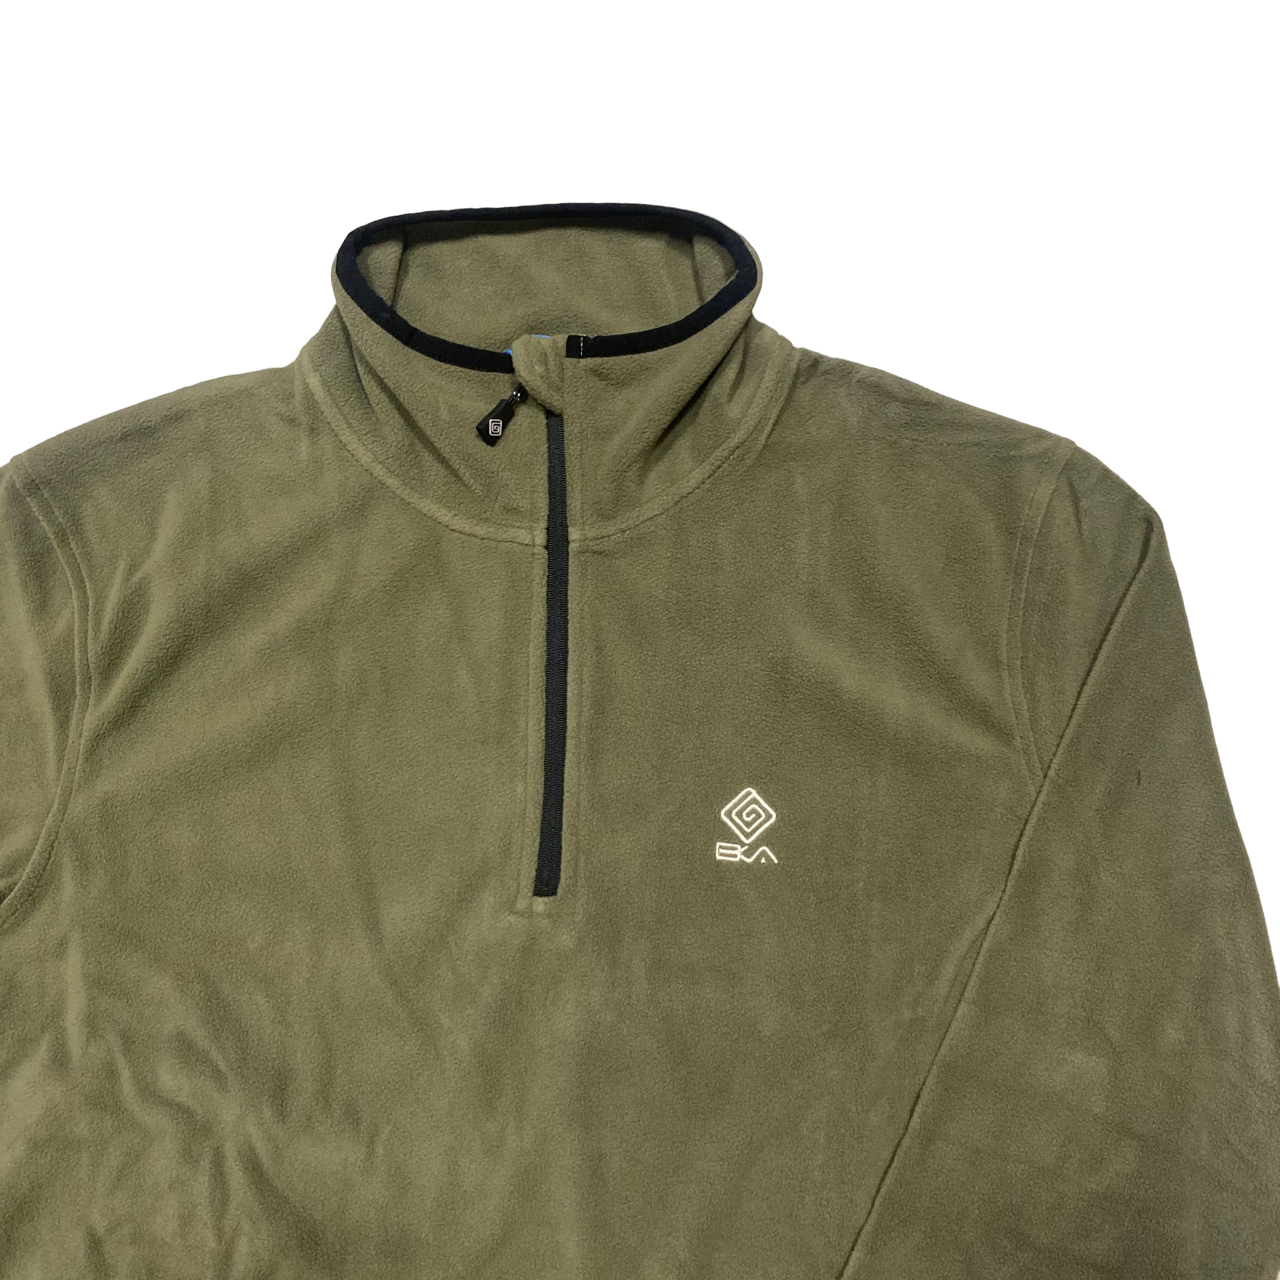 Brekka half-zip sweater in military green micropolar fleece